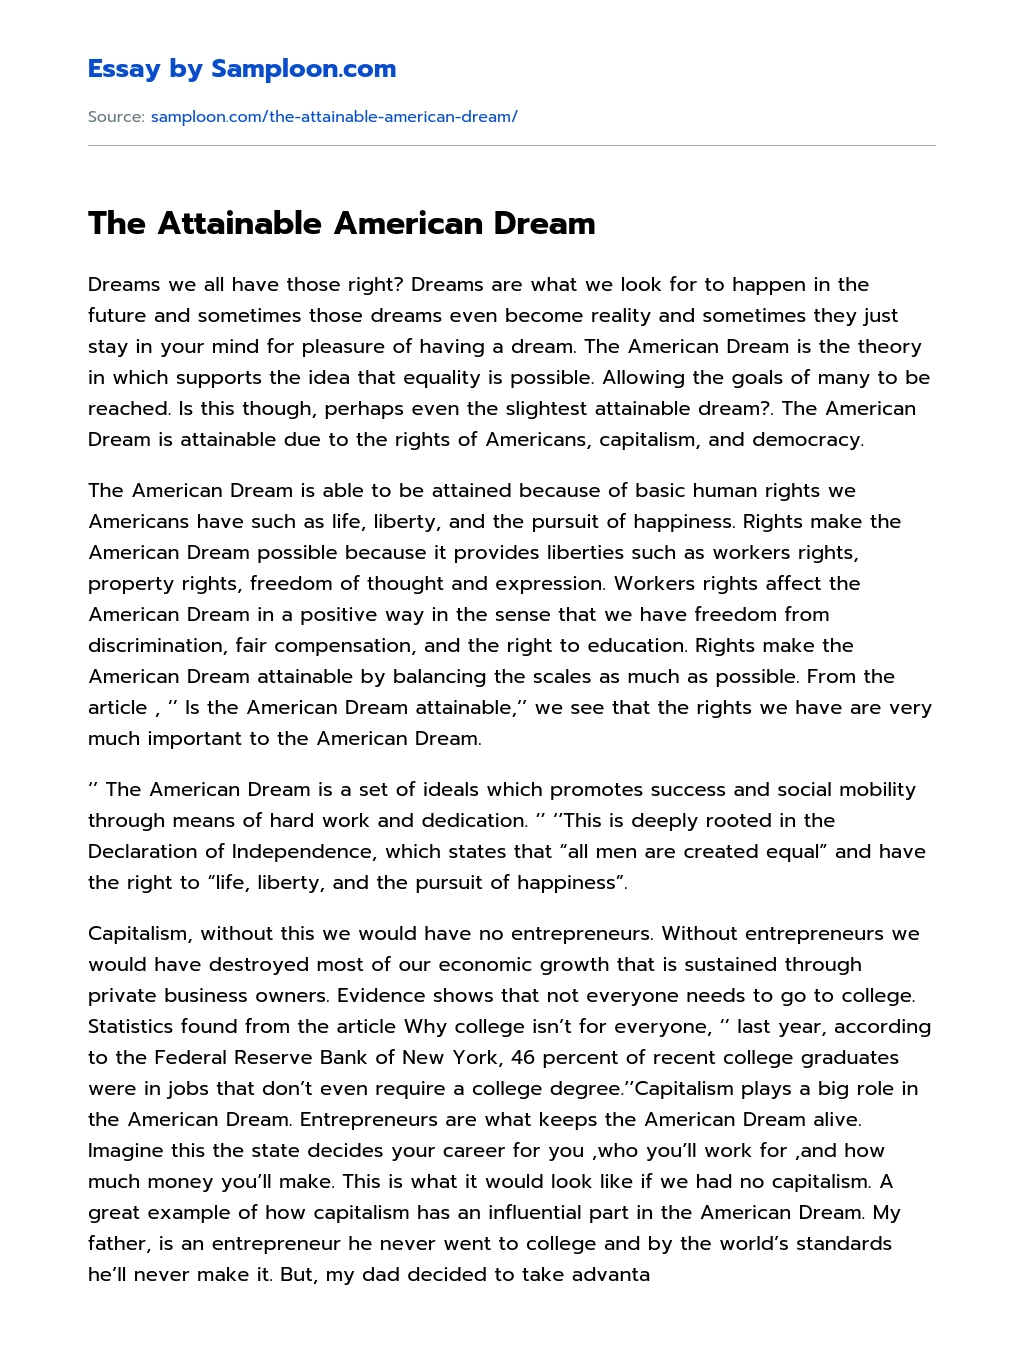 The Attainable American Dream essay